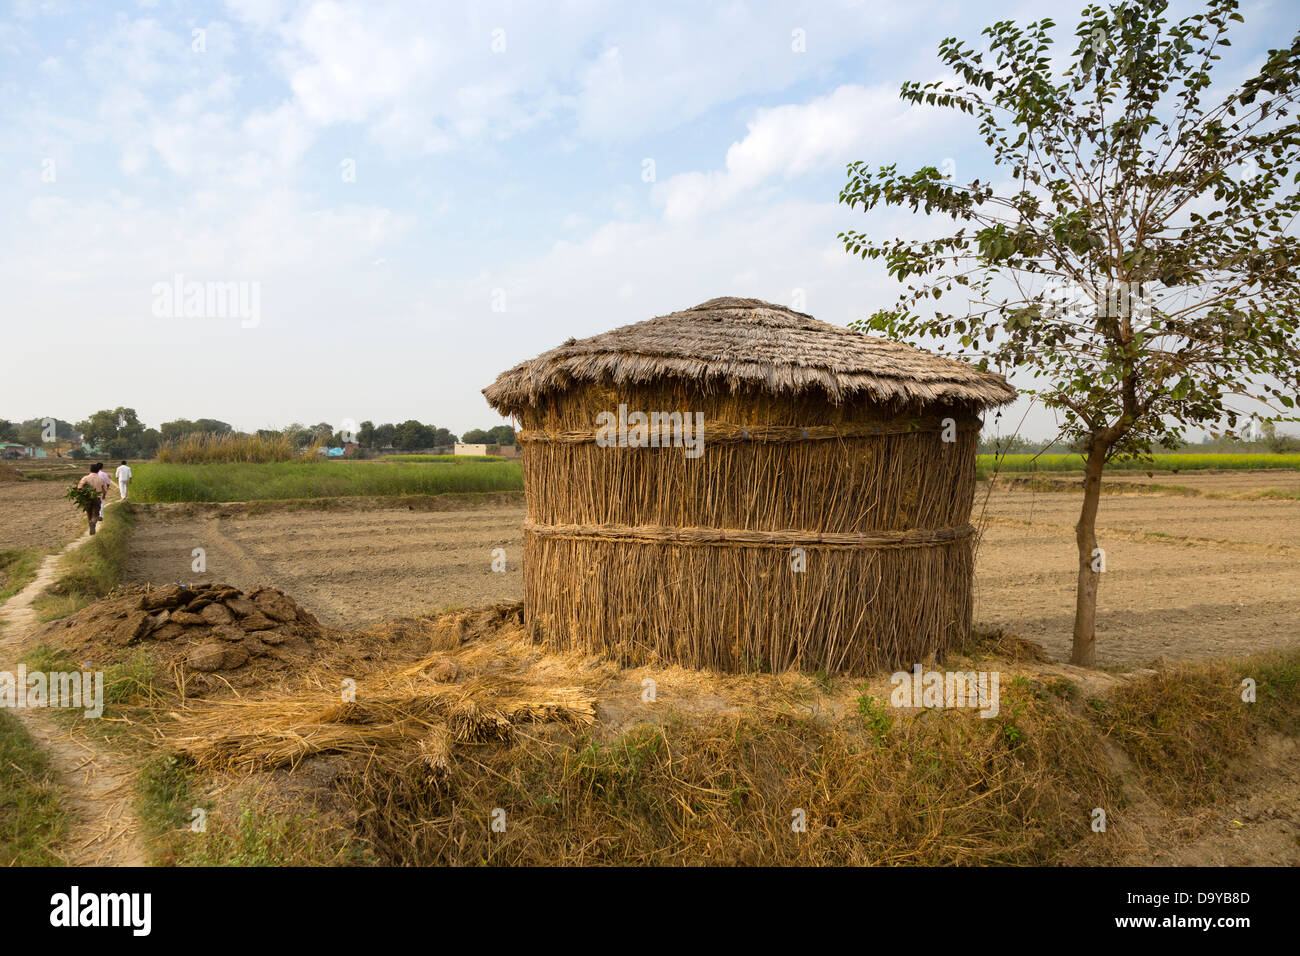 India, Uttar Pradesh, Aligarh, temporary shelter for storing cow pats Stock Photo